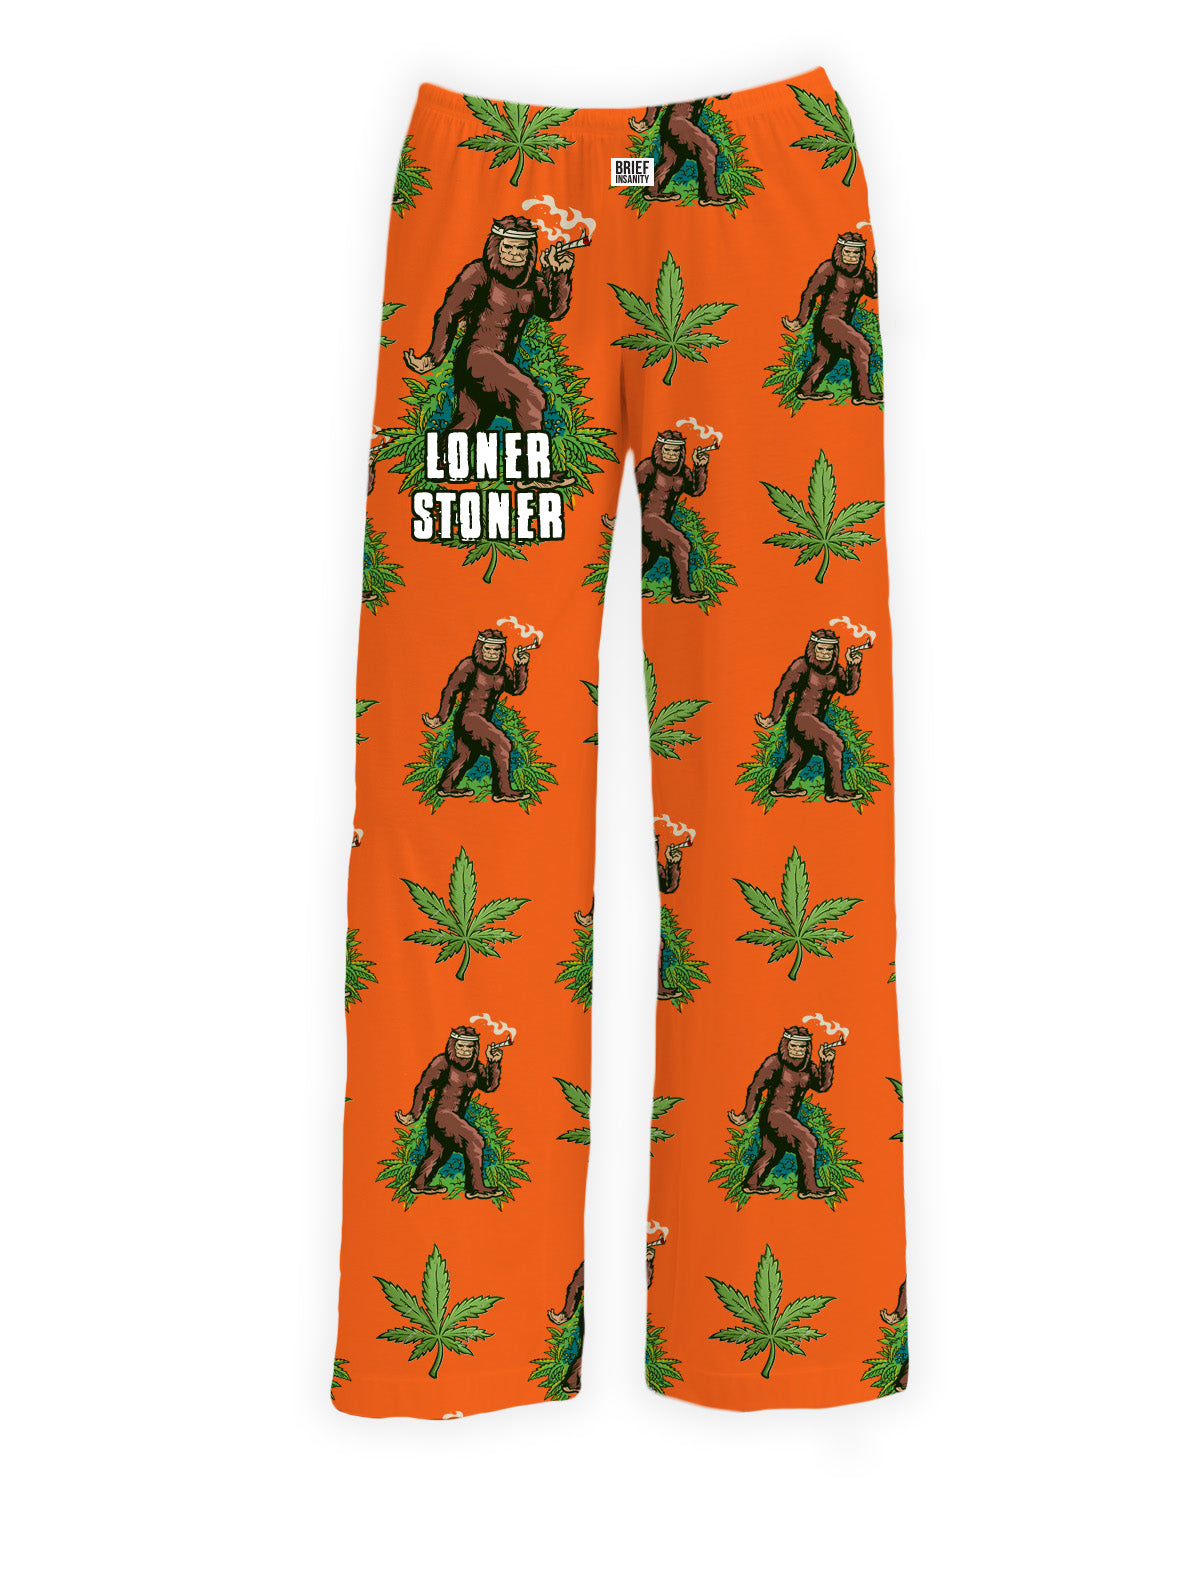 Brief Insanity Loner Stoner Bigfoot Marijuana Pajama Pants XX-Large